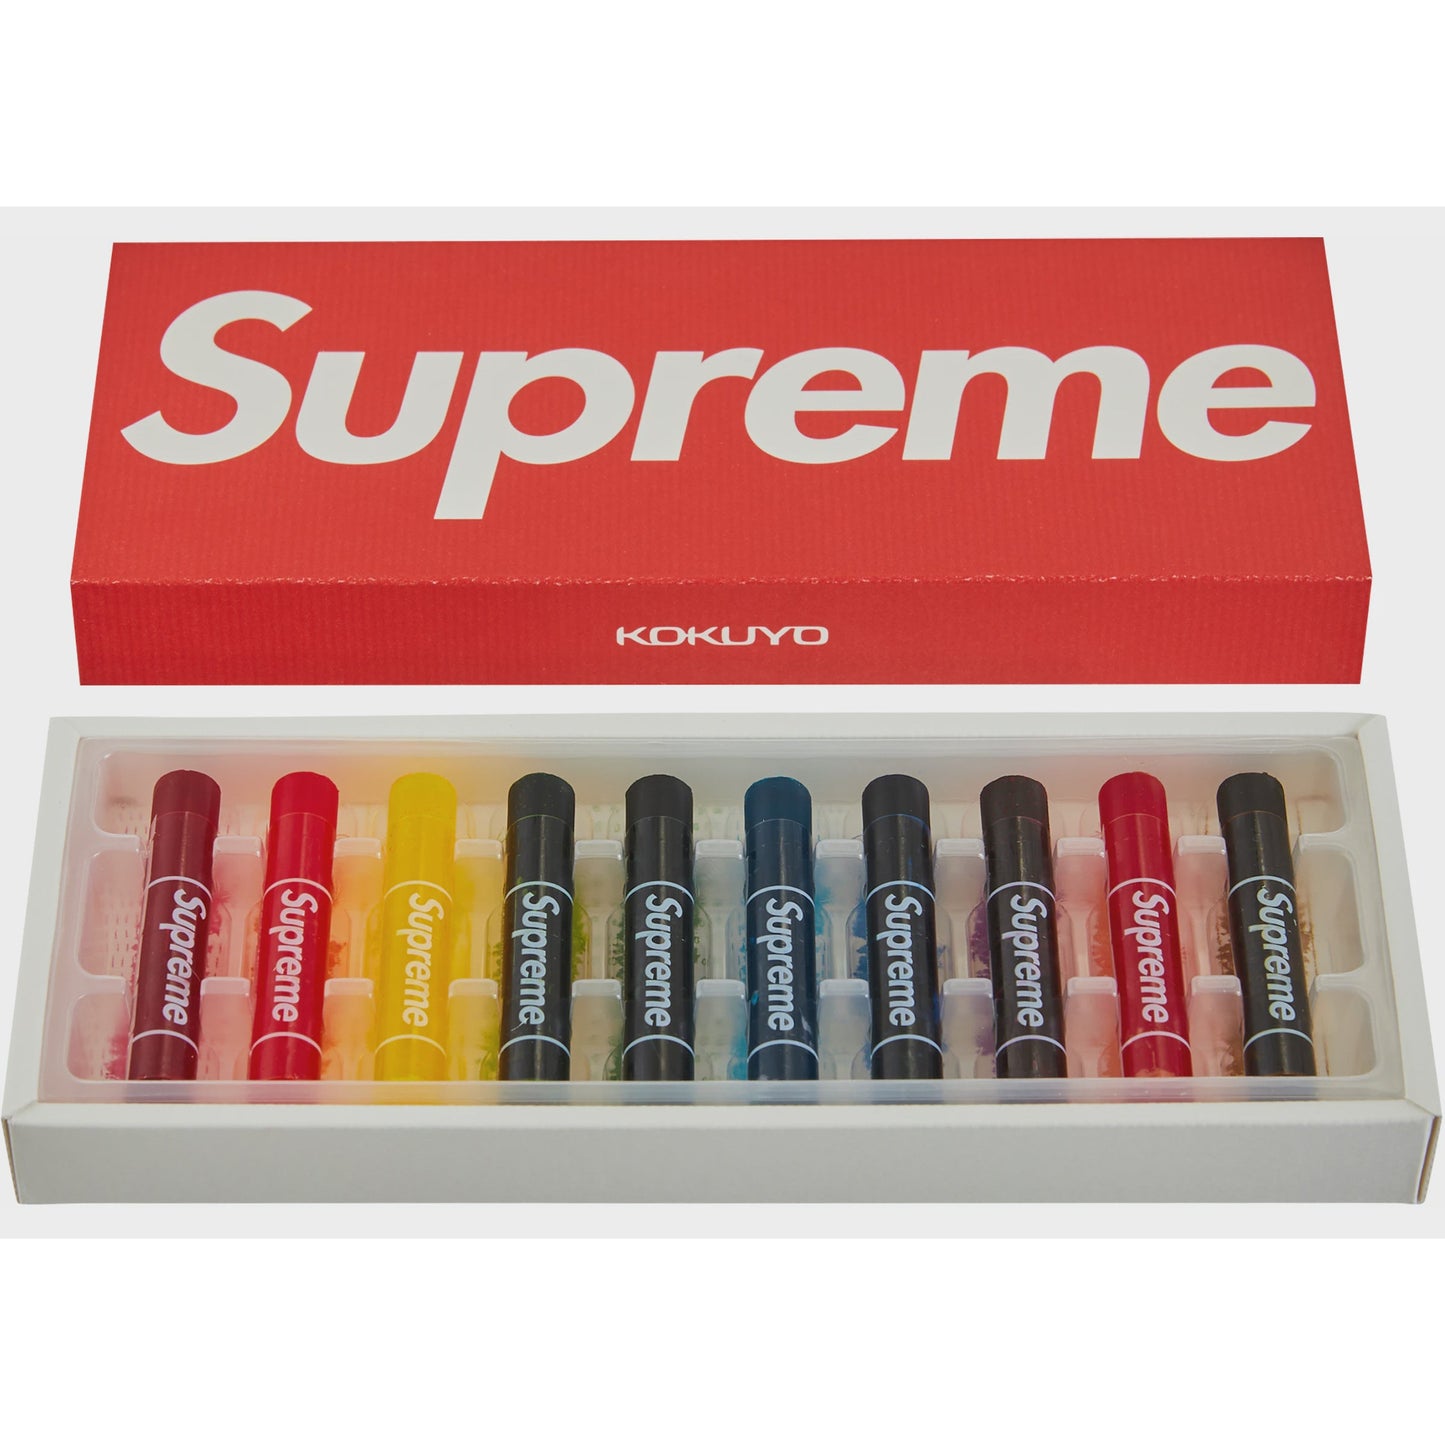 Supreme Kokuyo Translucent Crayons (Pack of 10) - Multicolor